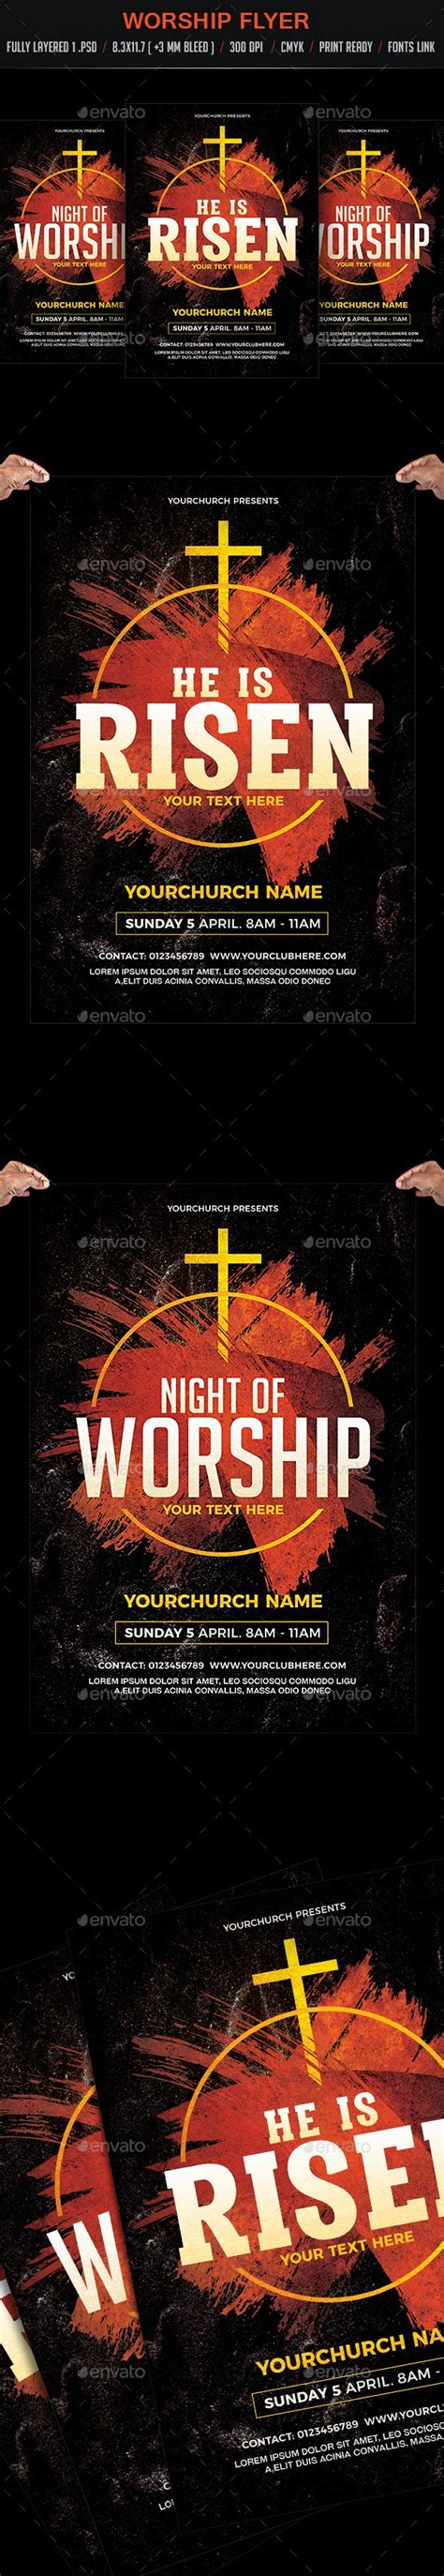 worship flyer poster  creativeartx graphicriver